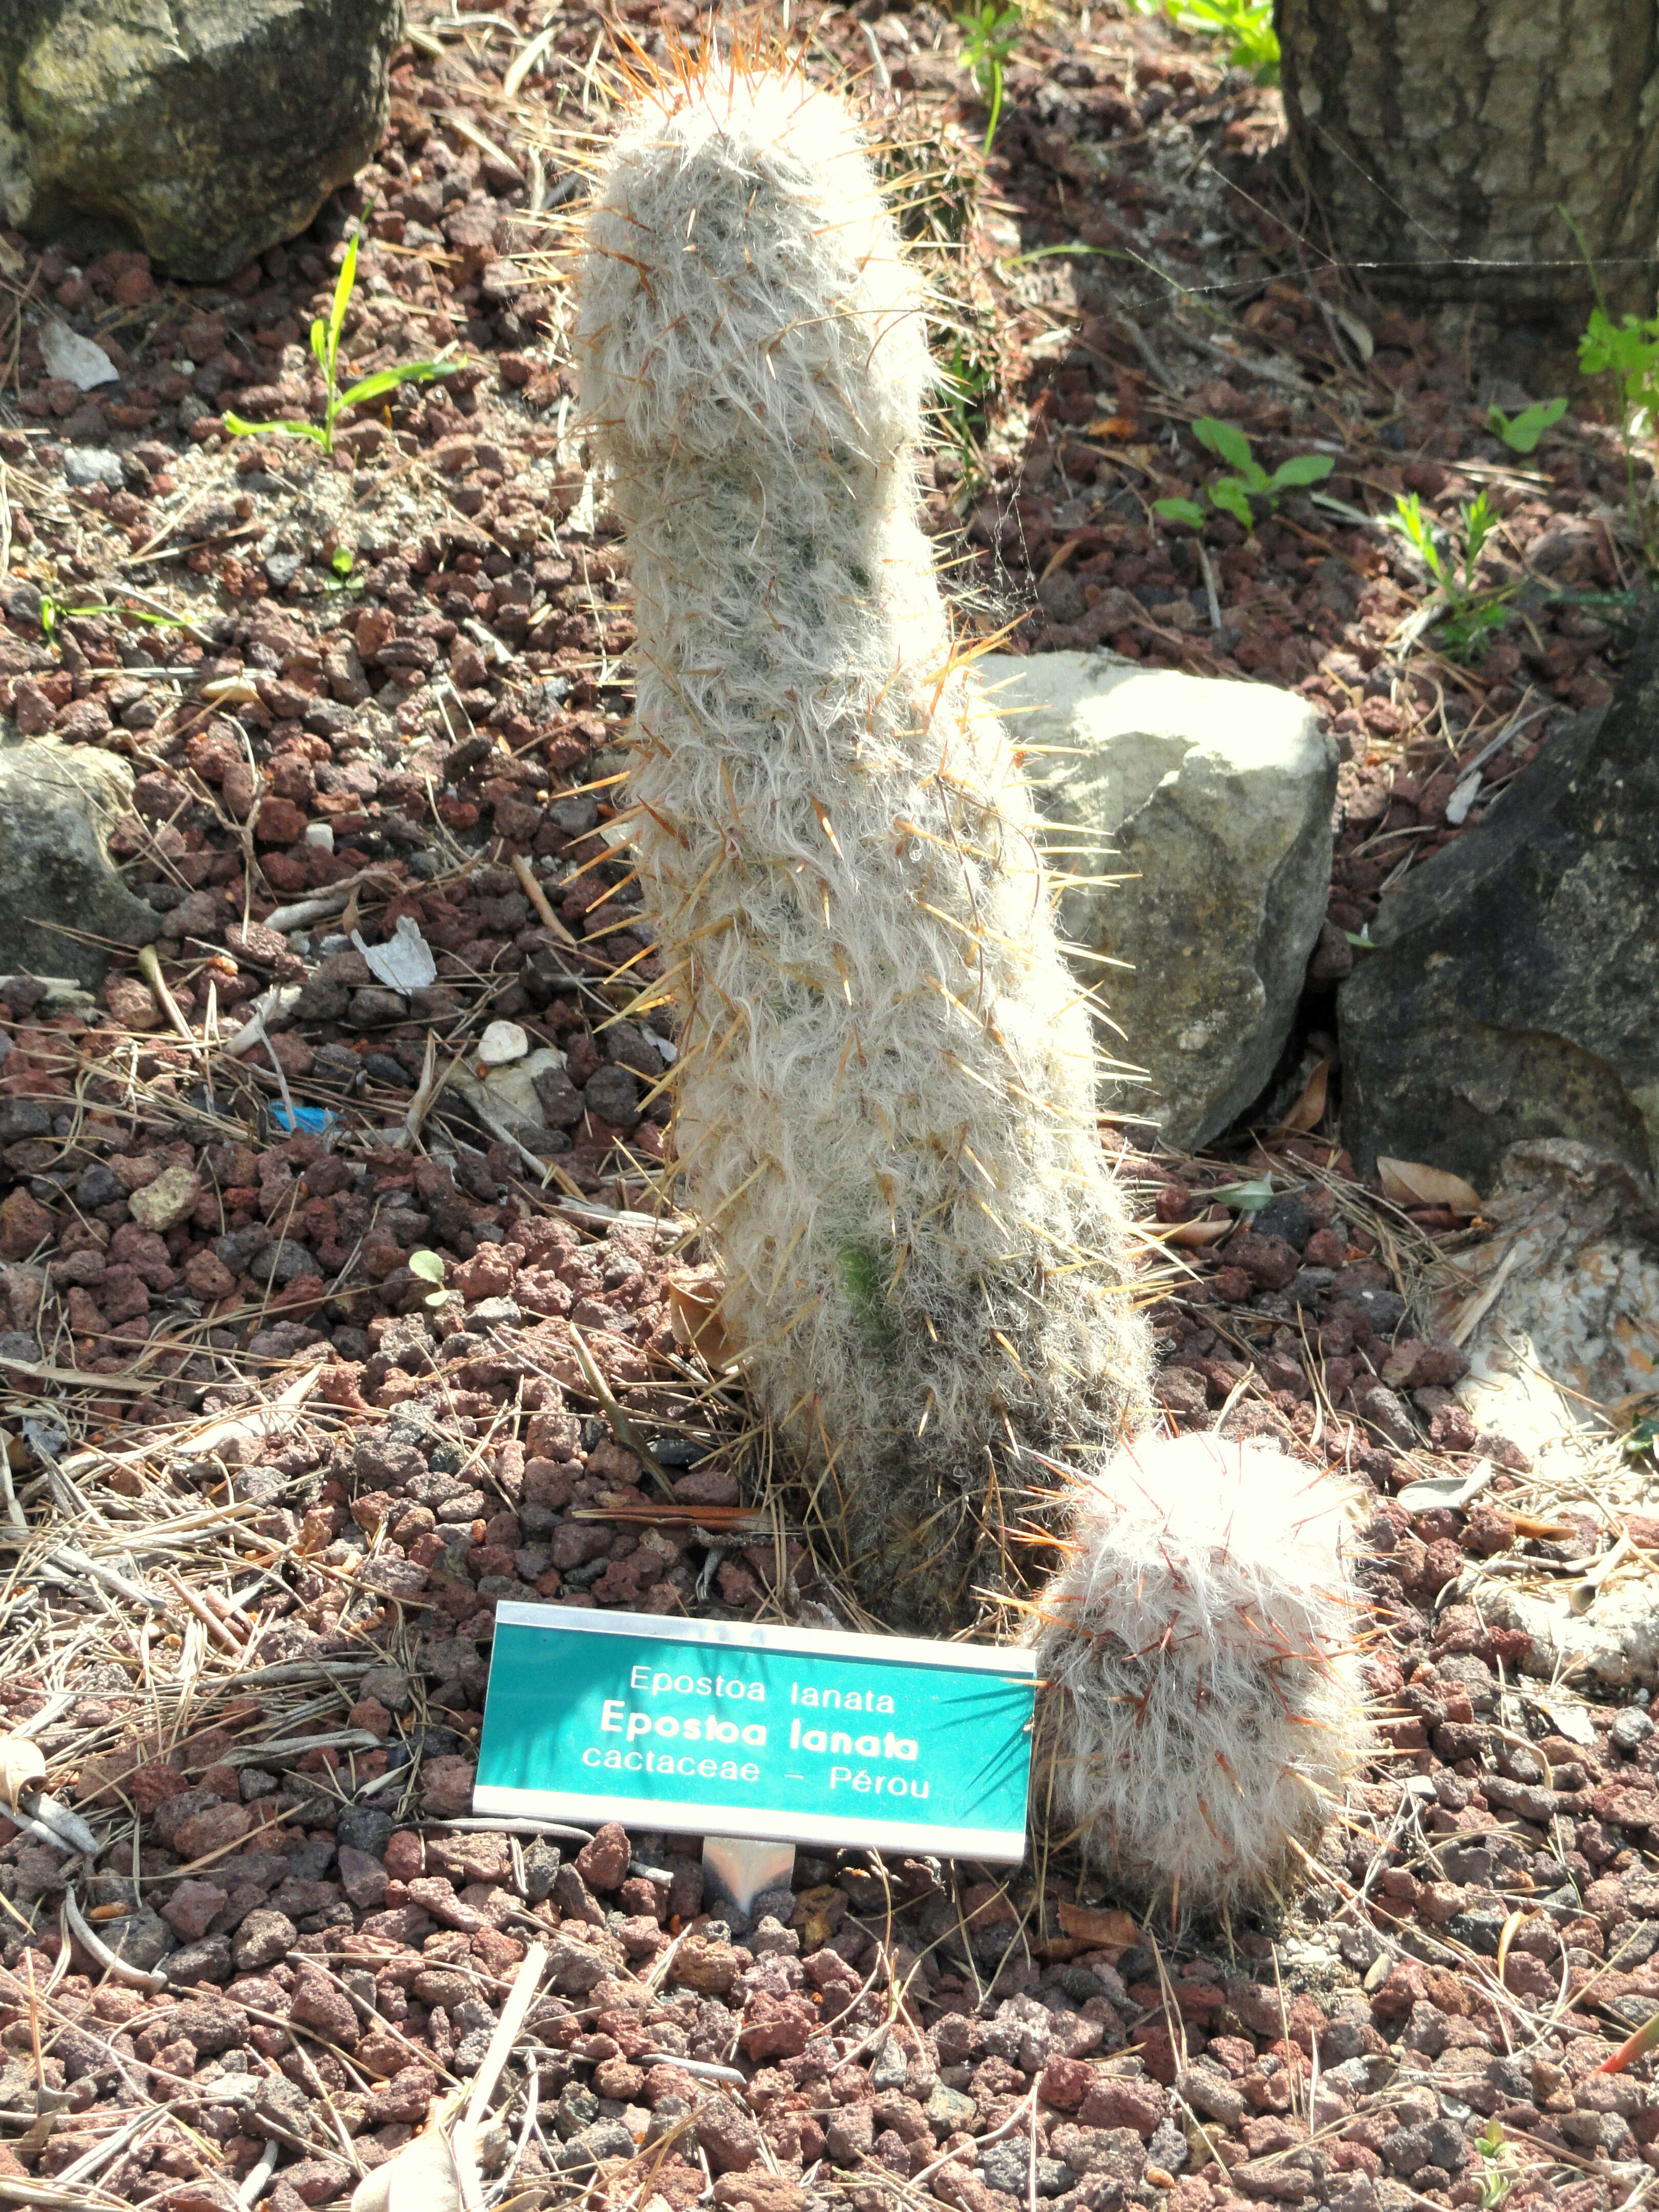 Image of Cotton Ball Cactus